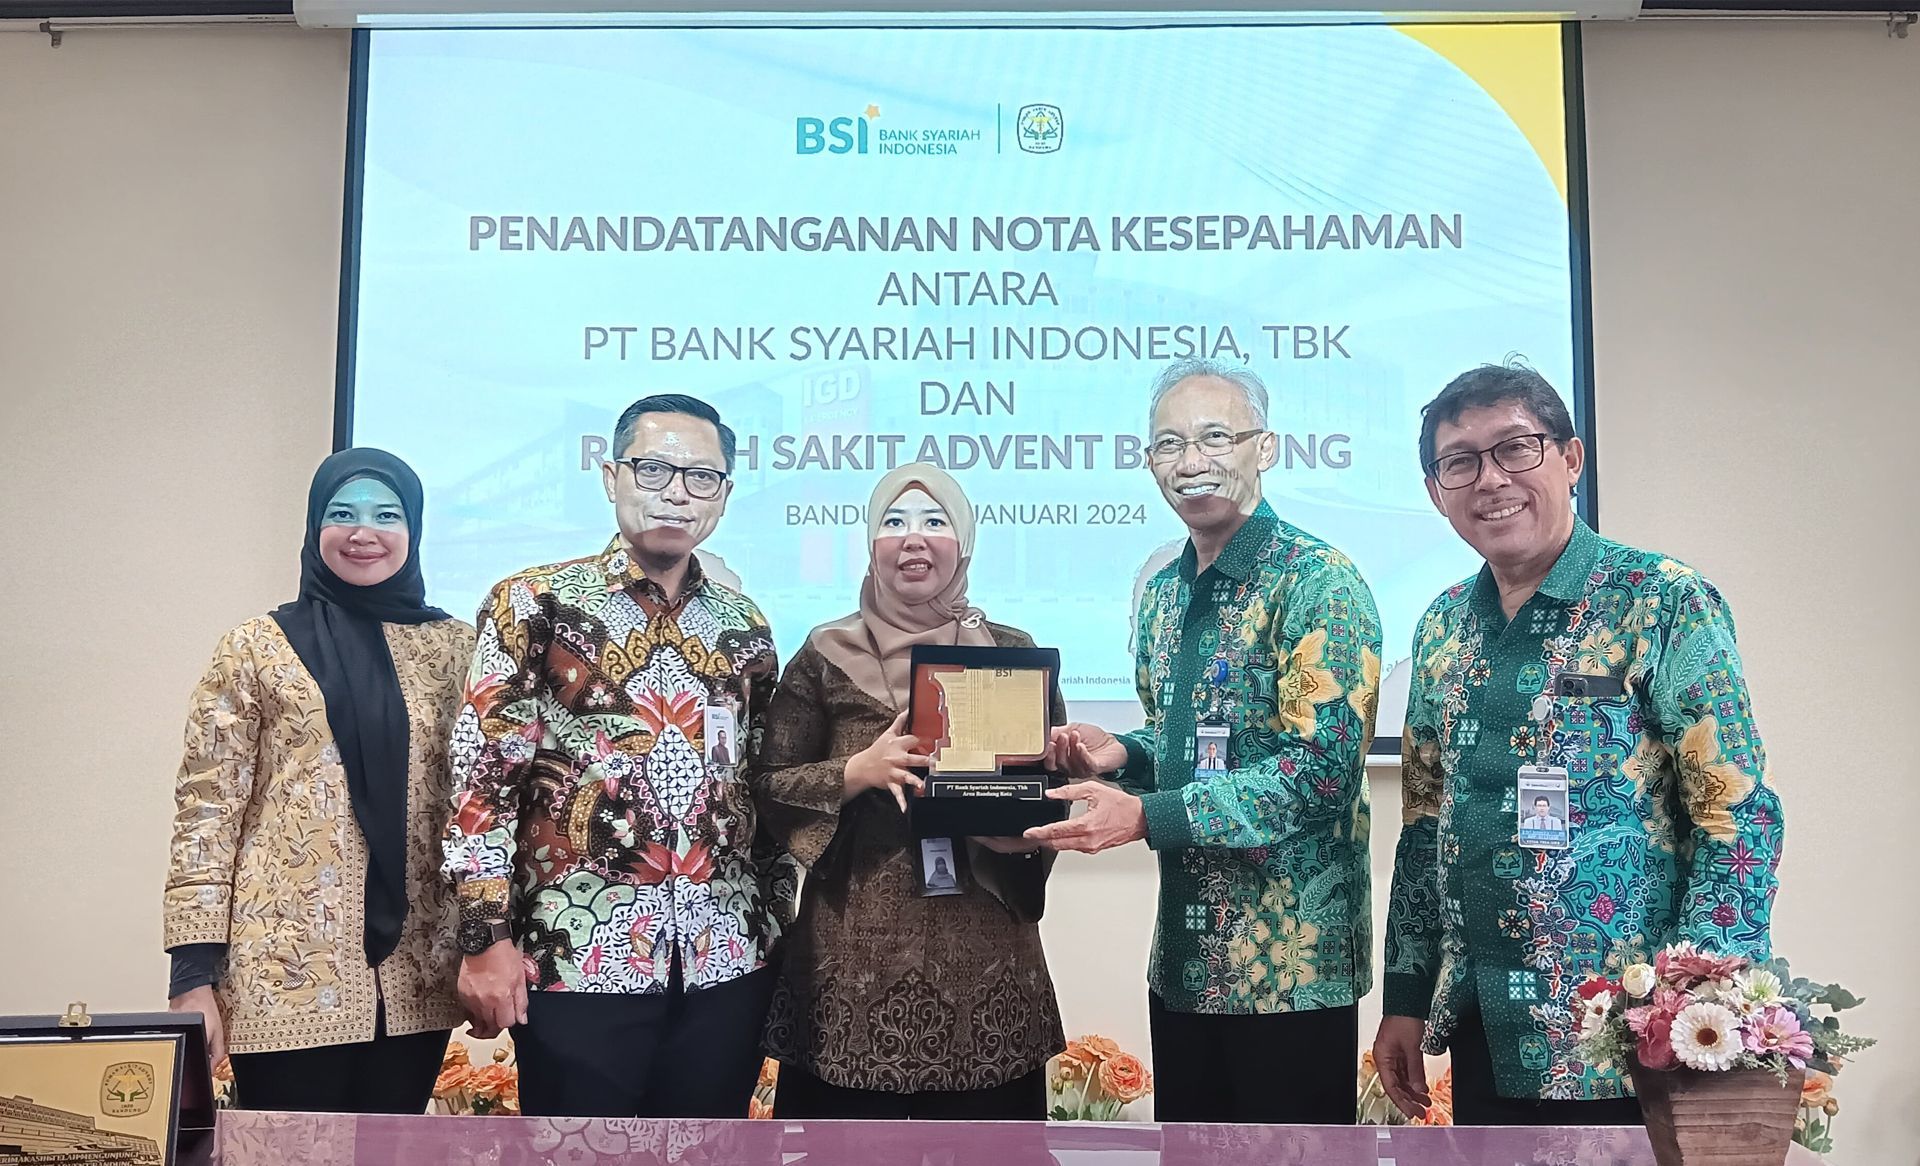 PT Bank Syariah Indonesia Tbk (BSI) dan Rumah Sakit Advent menandatangani perjanjian kerja sama, Jumat 26 Januari 2024